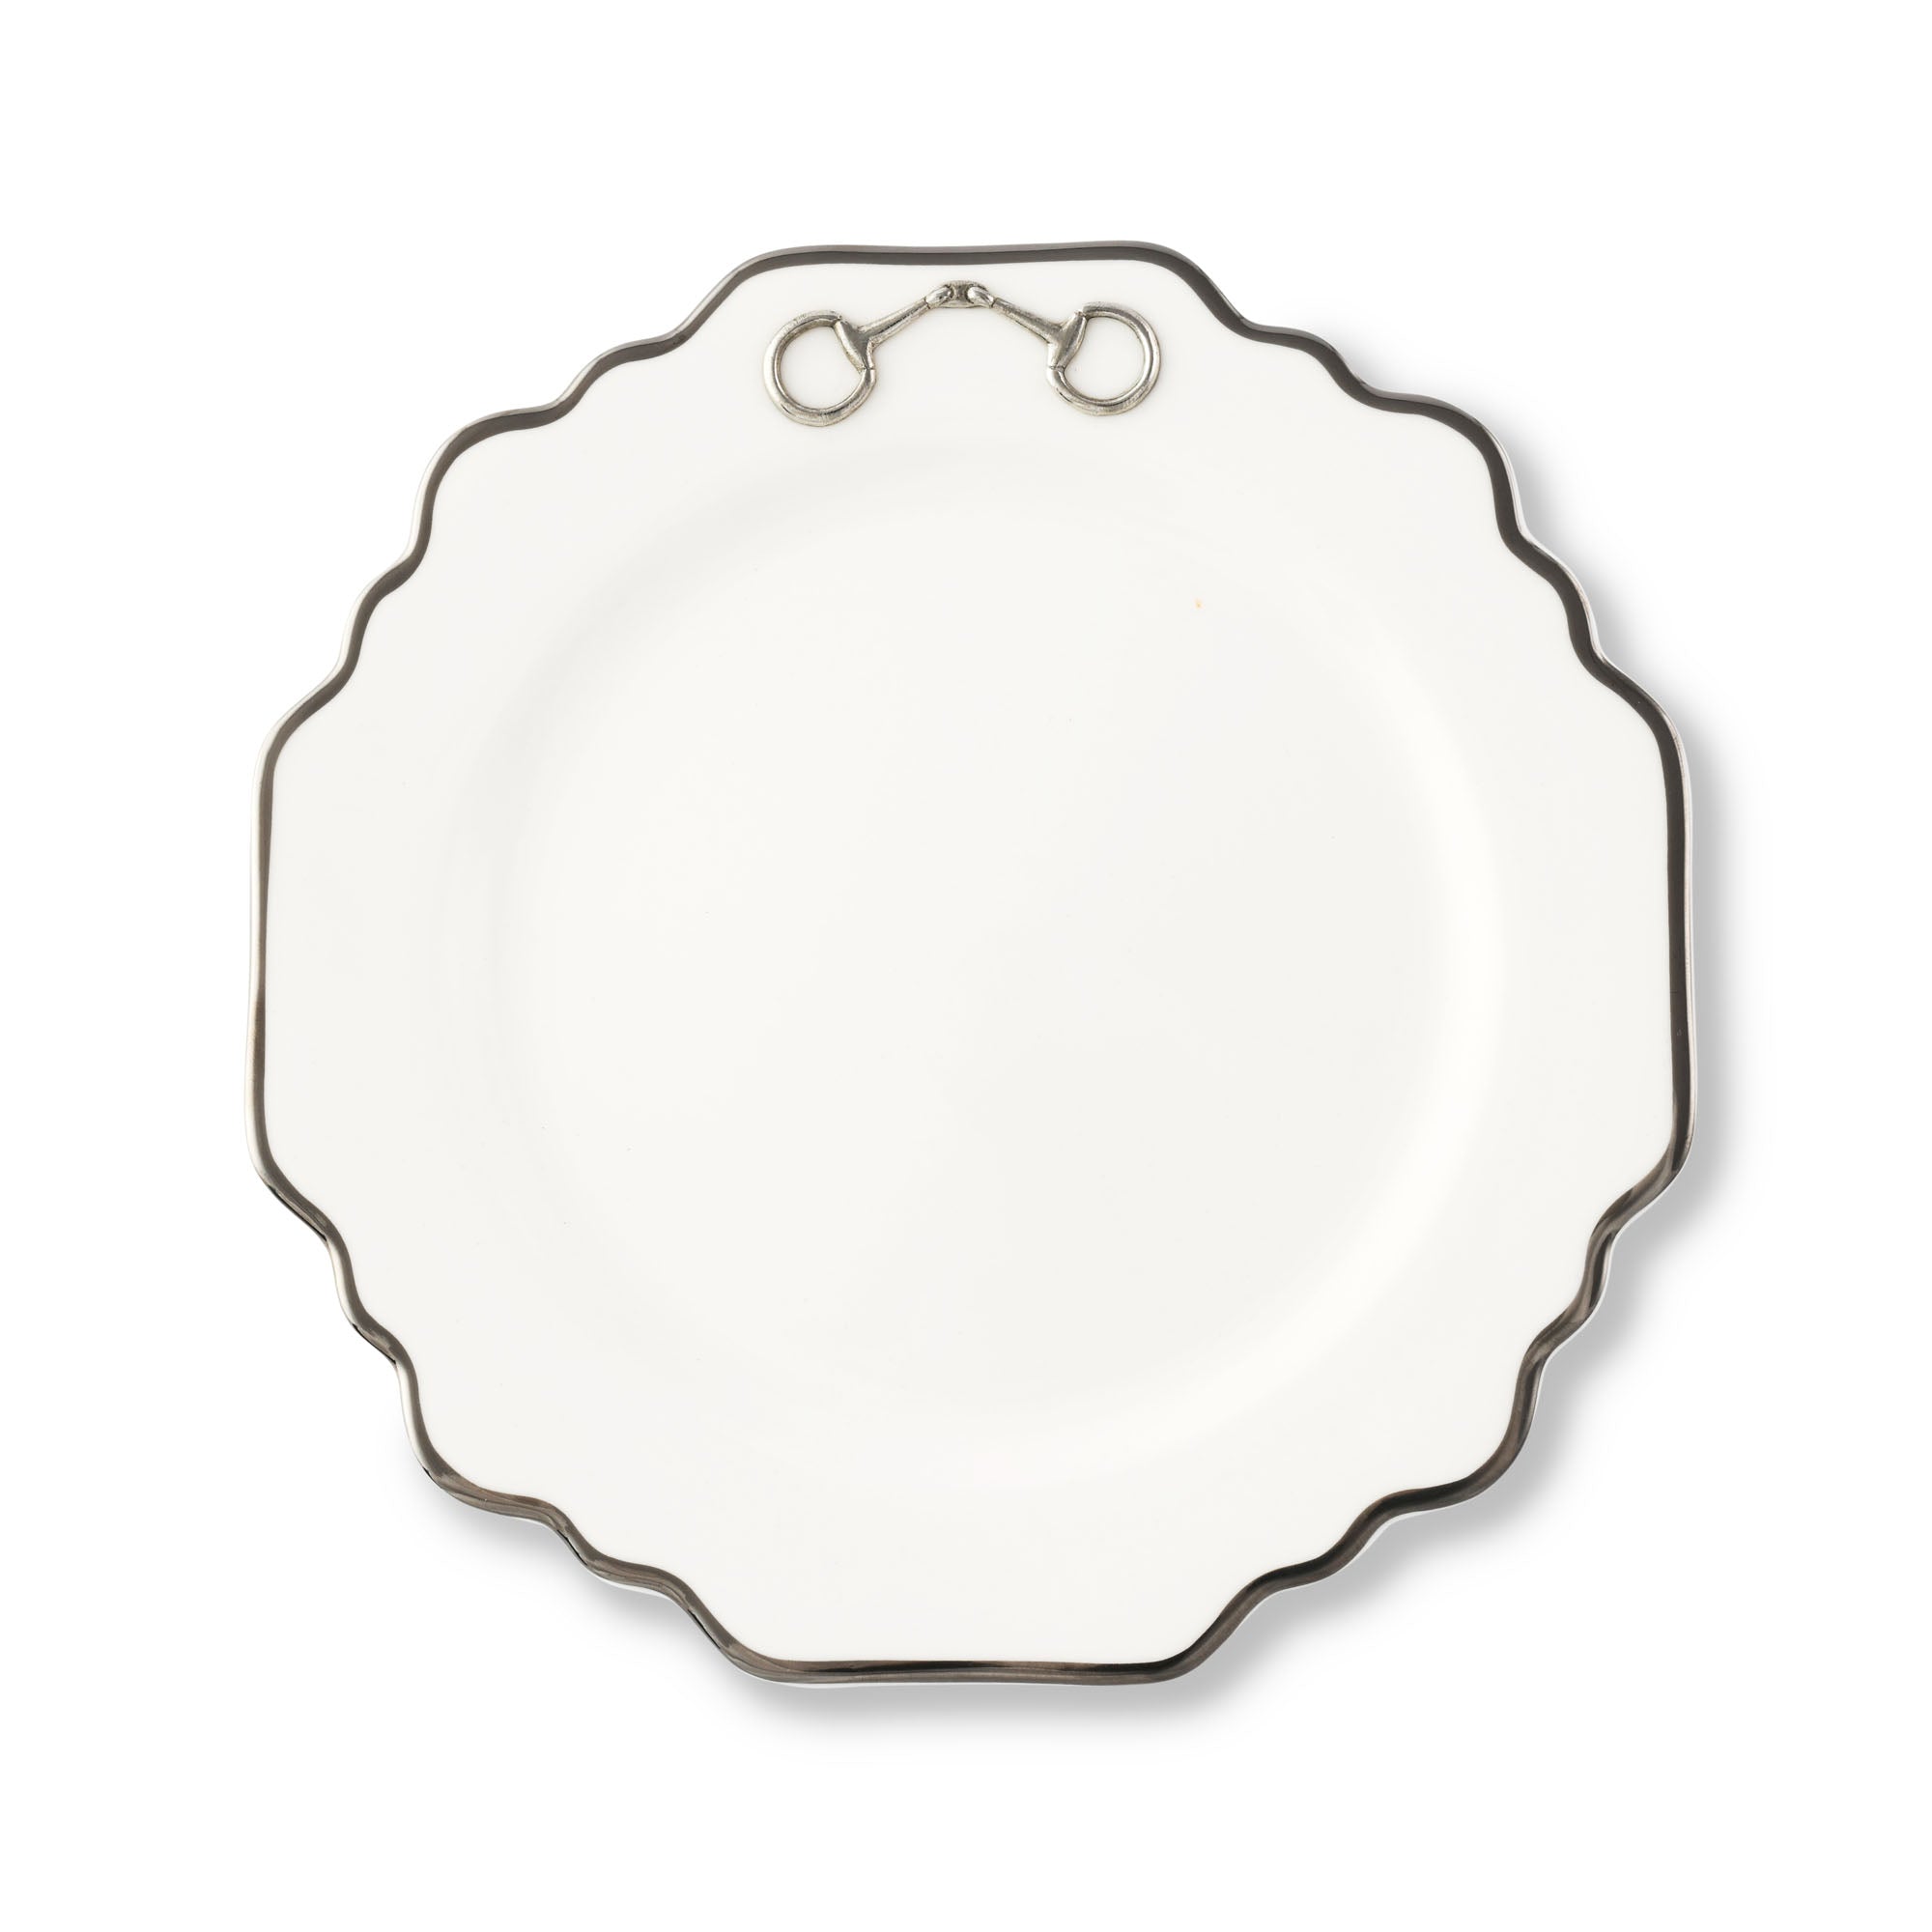 Vagabond House Pewter Bit Bone China Scallop Salad / Dessert Plate Platinum Rim Product Image